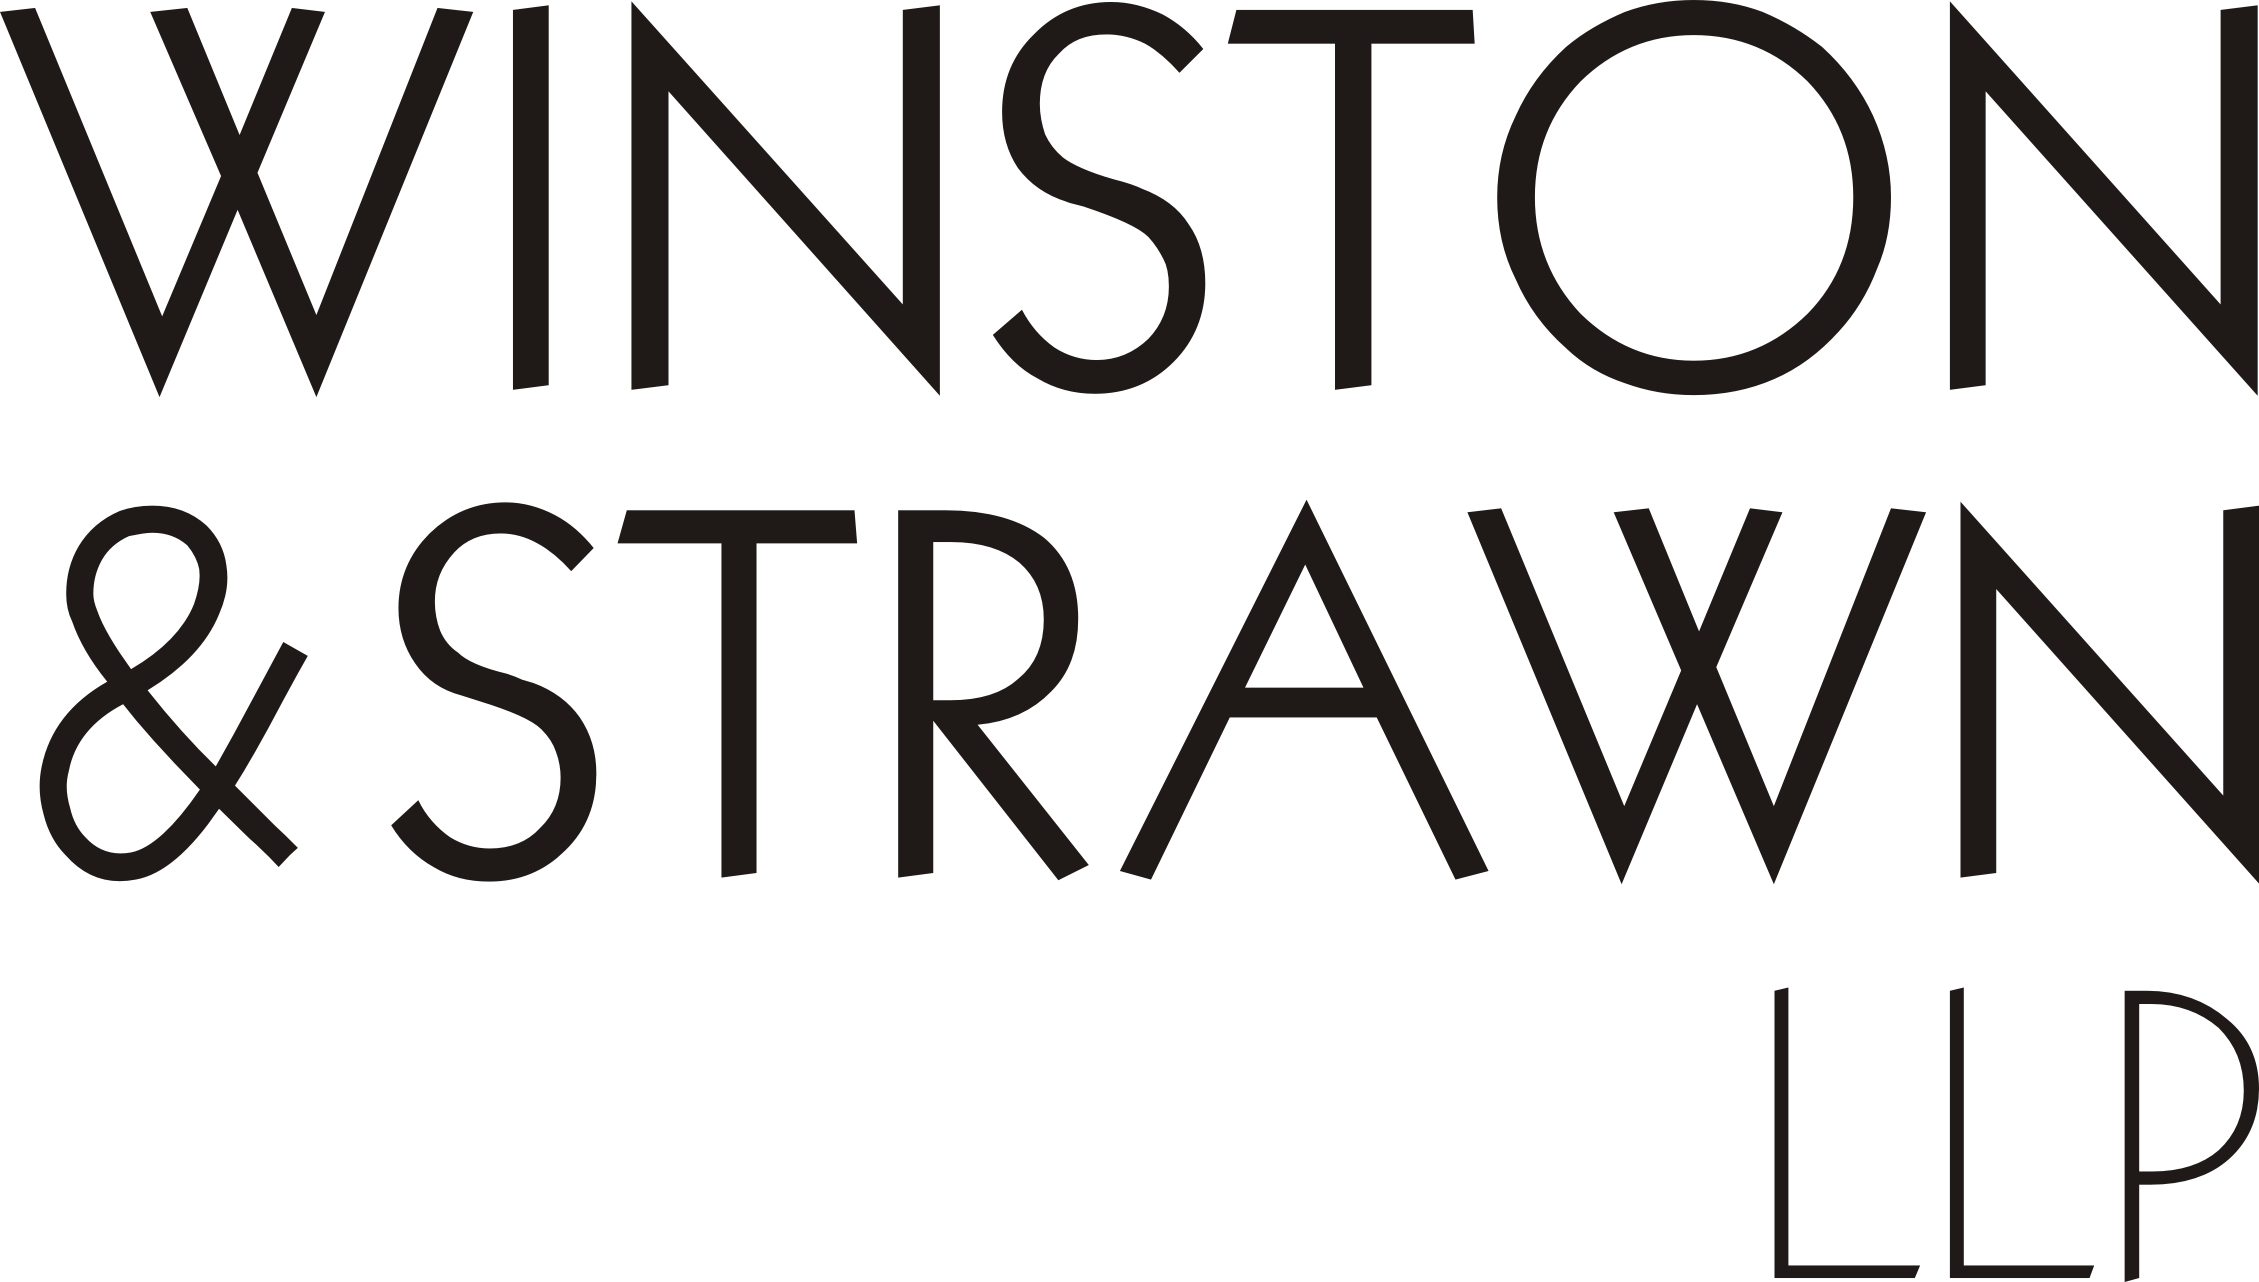 Winston Strawn logo